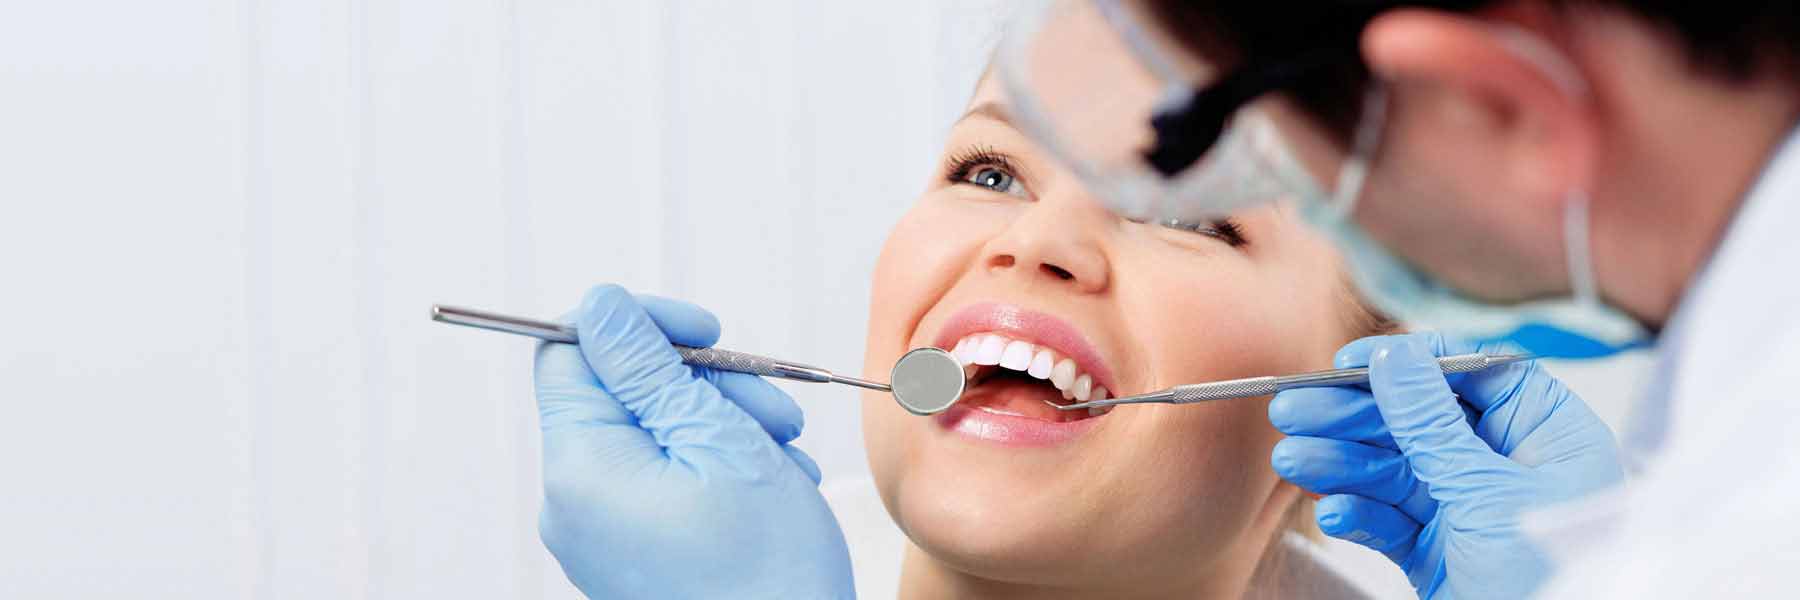 Dental Service in Chisholm - Tooth N Care